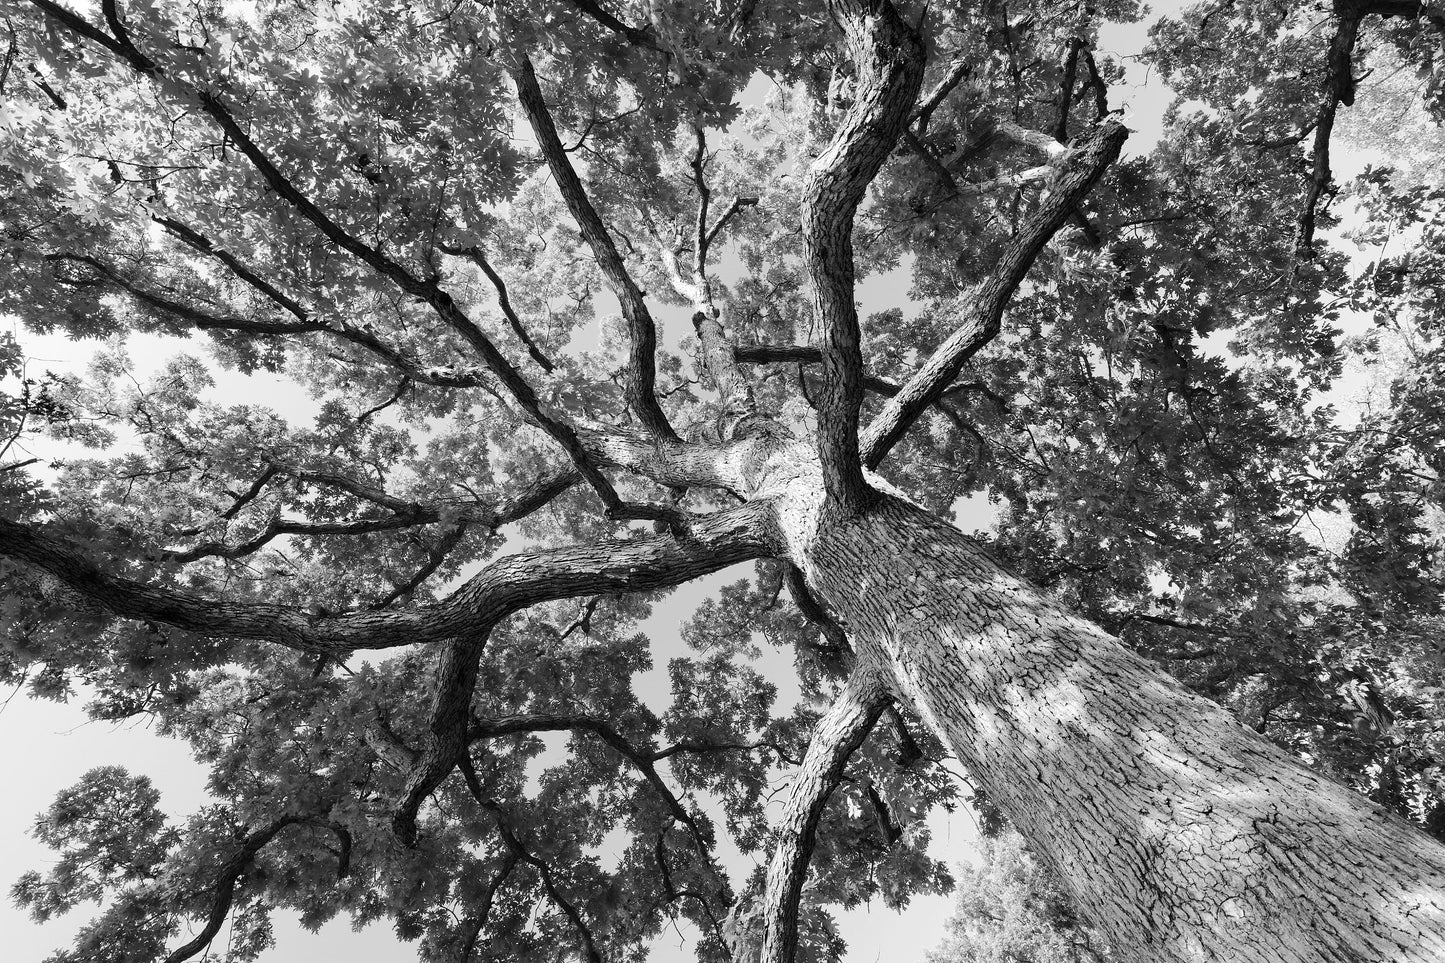 Oak Tree wall art, black and white tree photography, oak tree print, large picture, canvas decor, 5x7 8x10 11x14 12x12 16x20 24x36 40x60